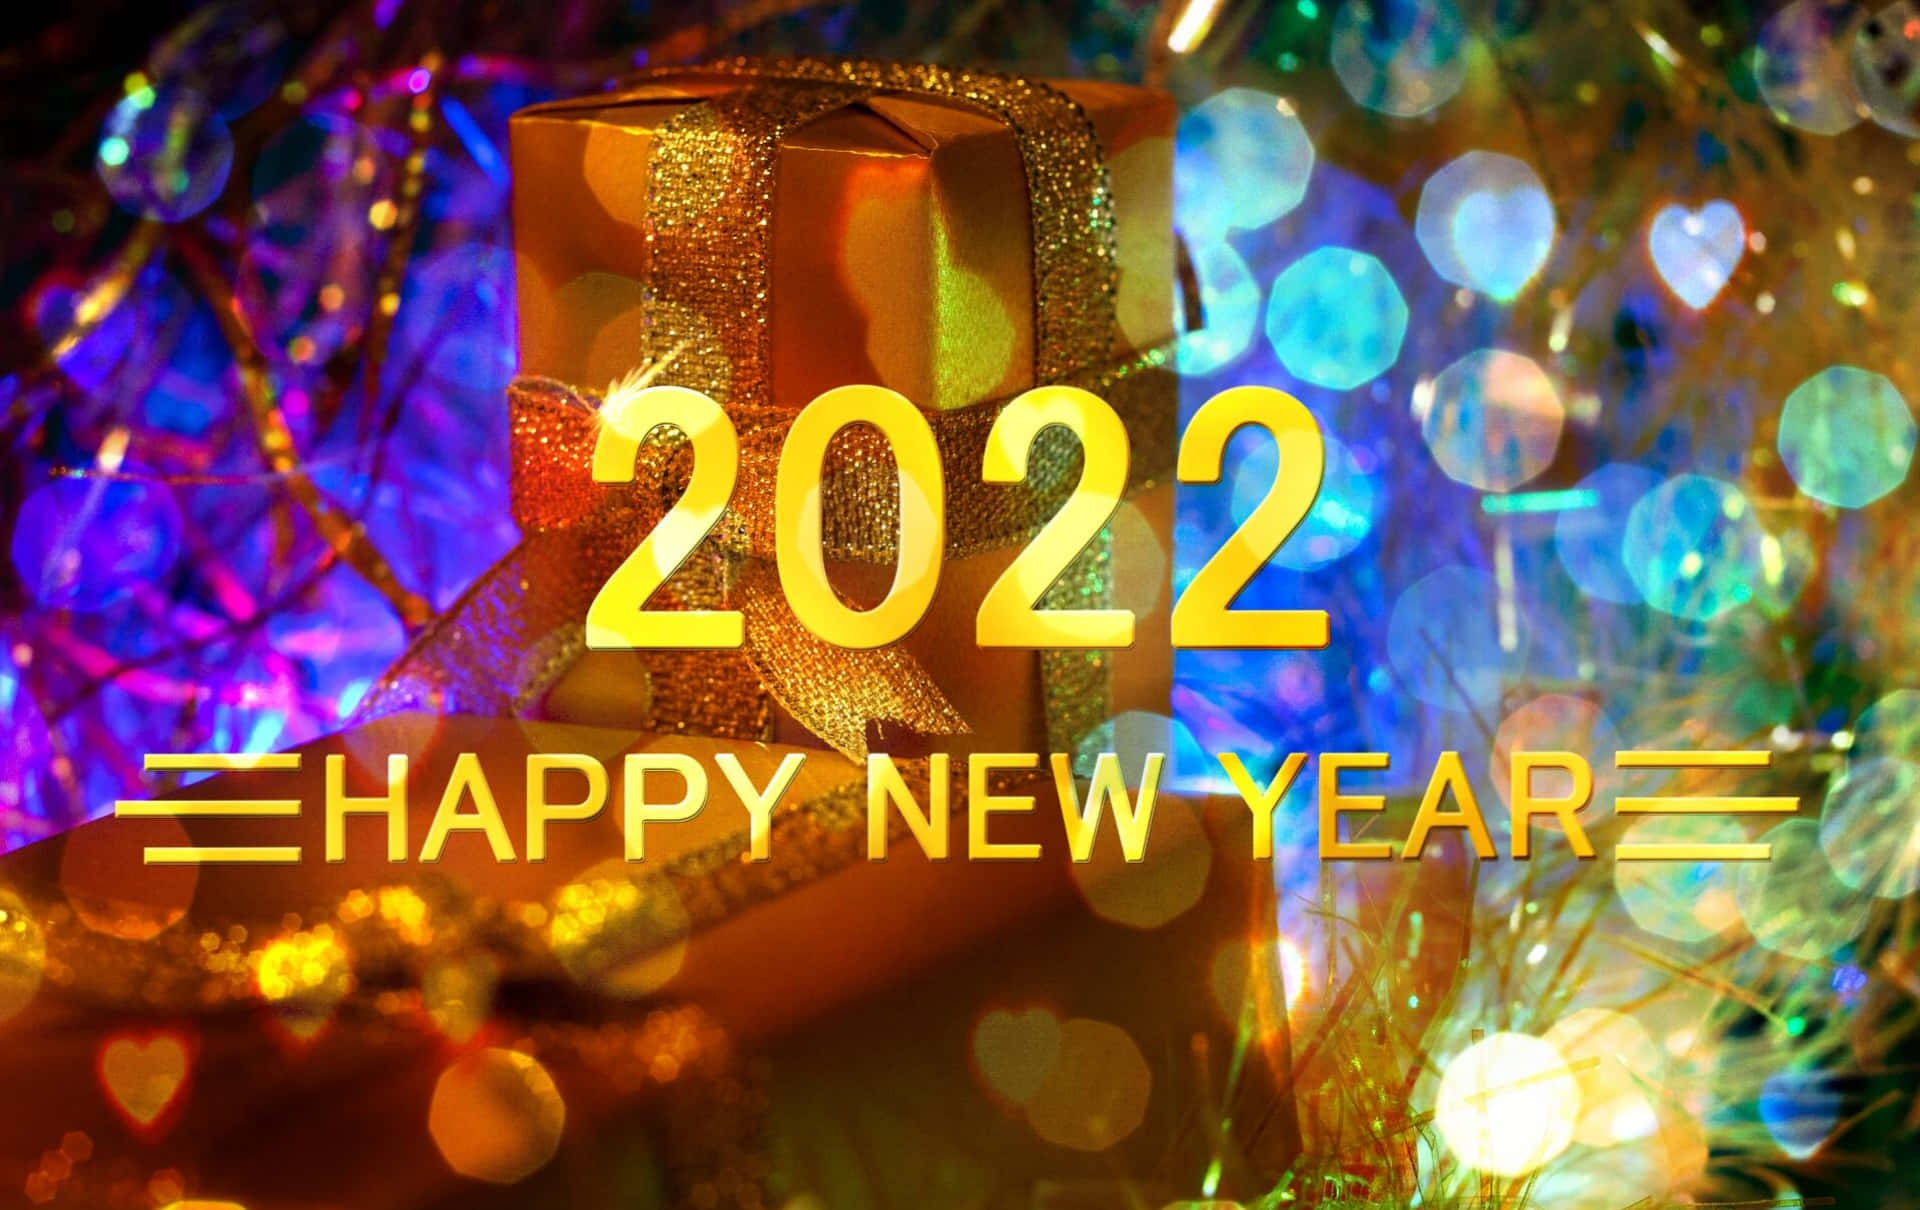 Celebrating a Happy New Year 2022!